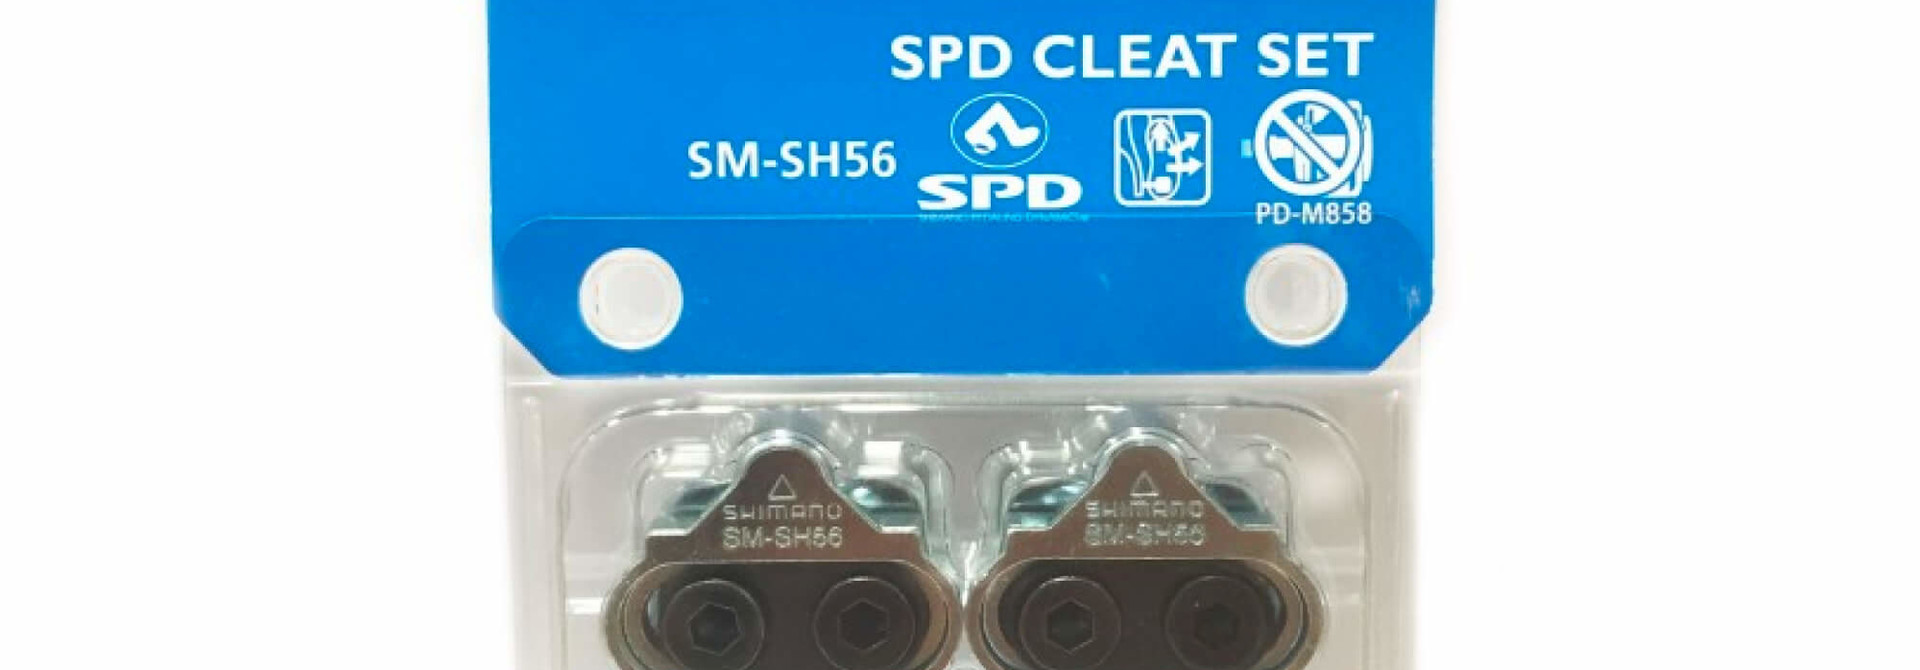 SM-SH56 Spd Cleat Set Multiple-Release